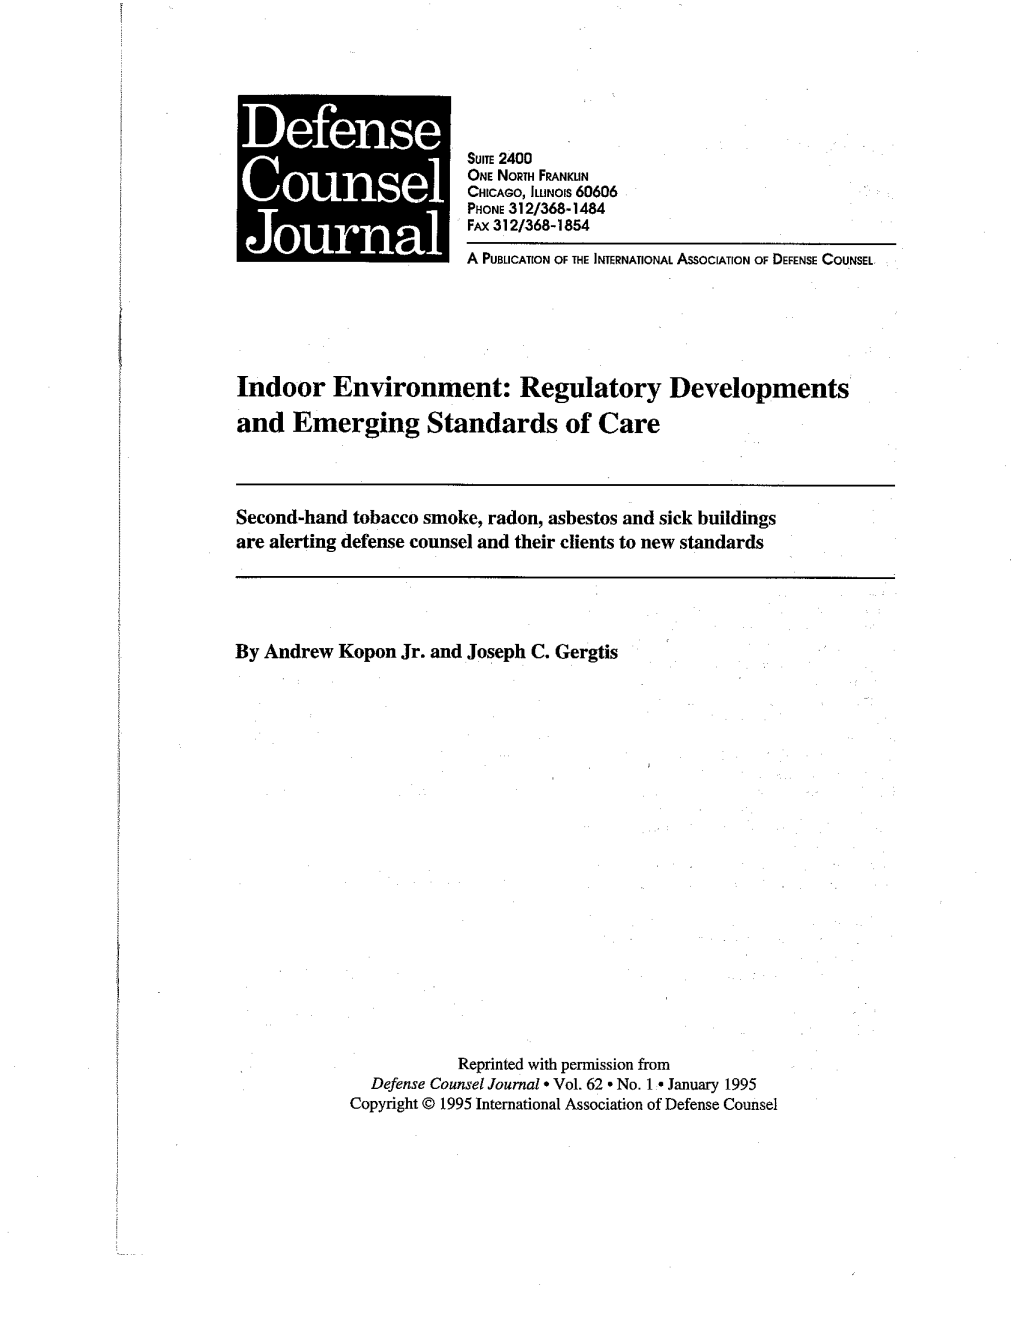 Indoor Environment: Regulatory Developments and Emerging Standards of Care